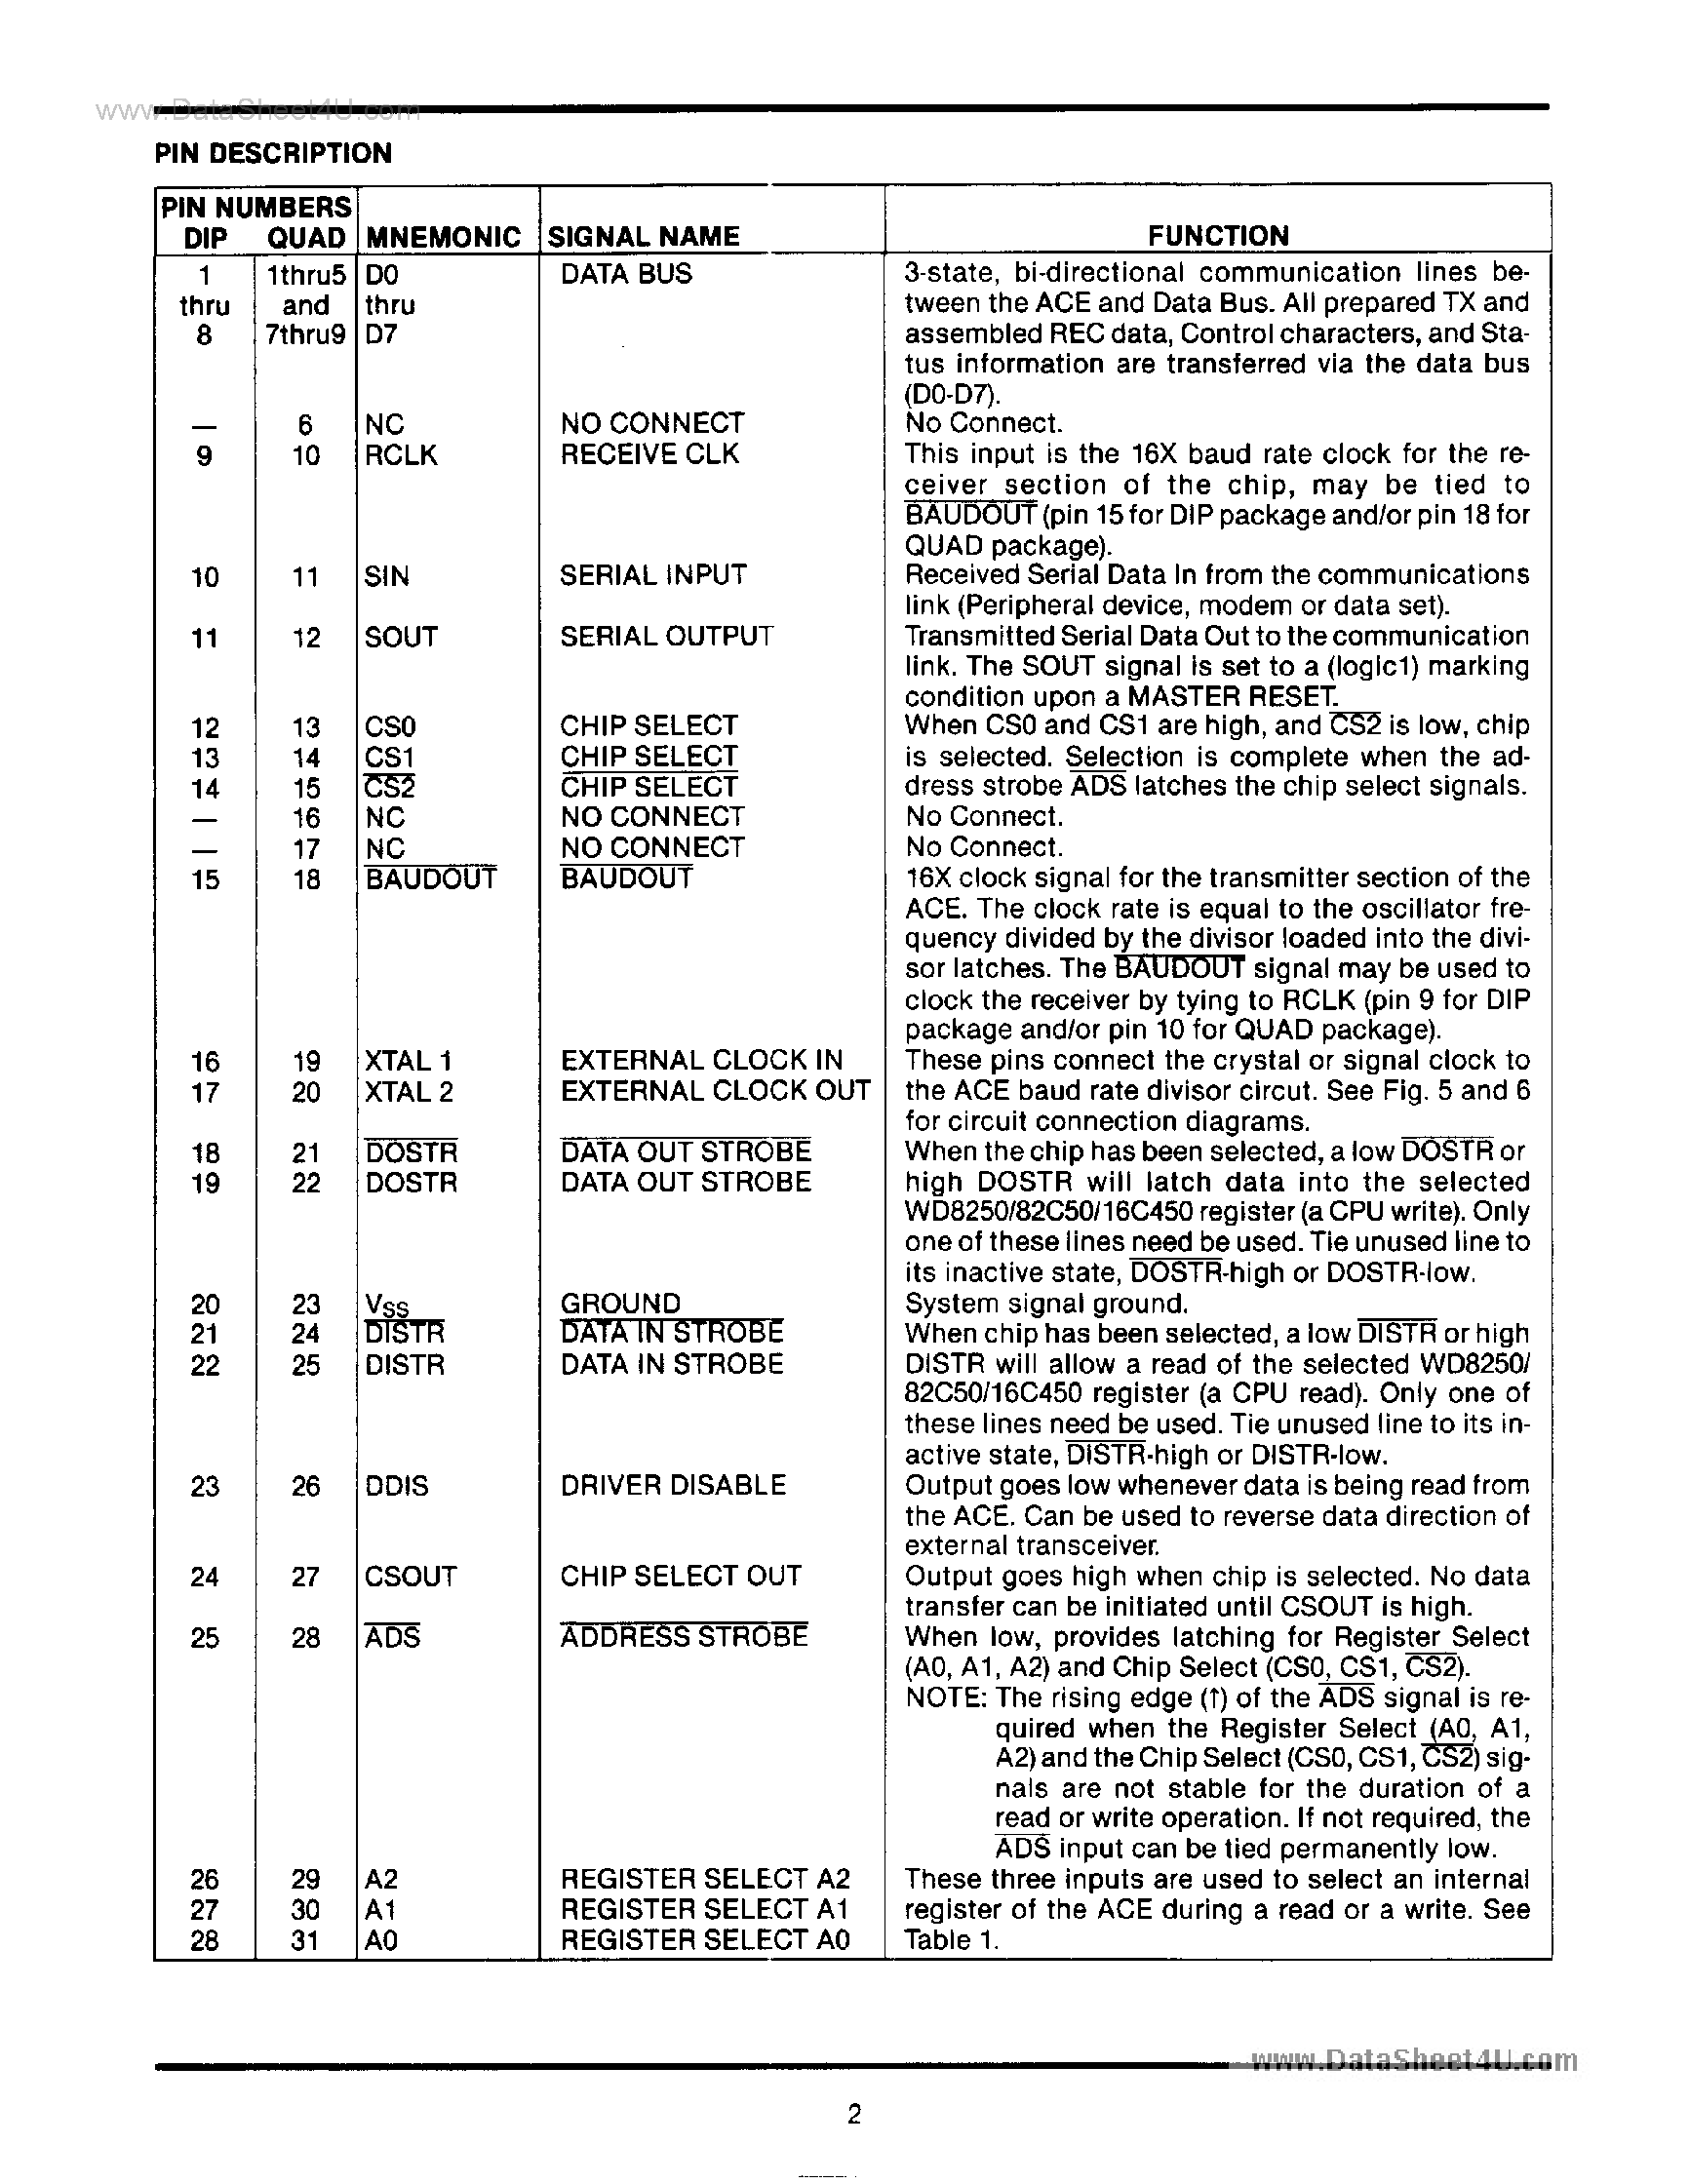 Datasheet WD8250 - ACE page 2